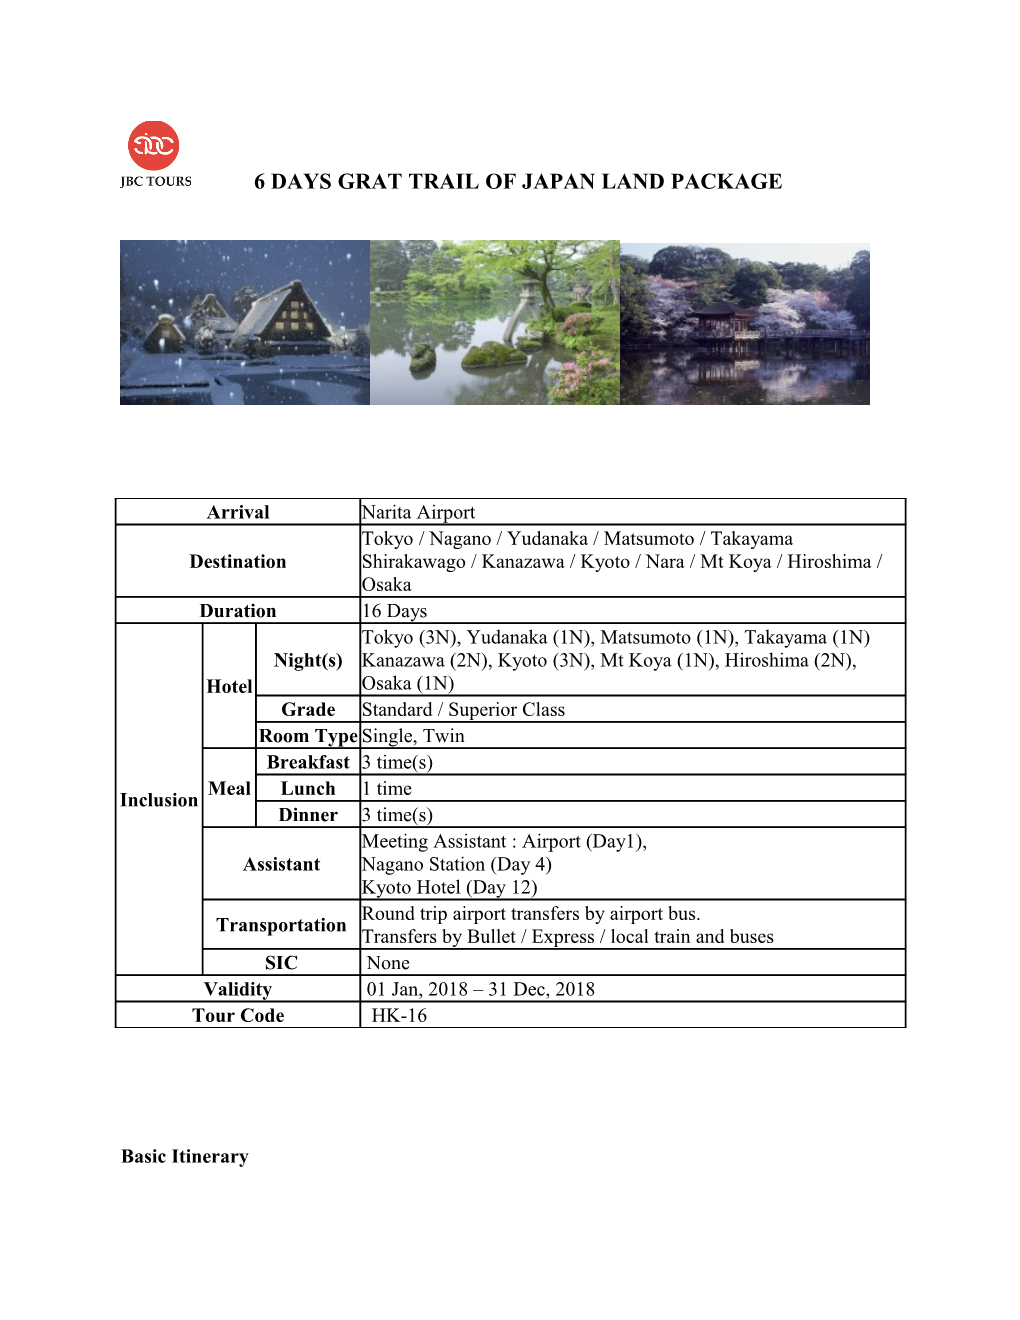 6 Days Grat Trail of Japan Land Package